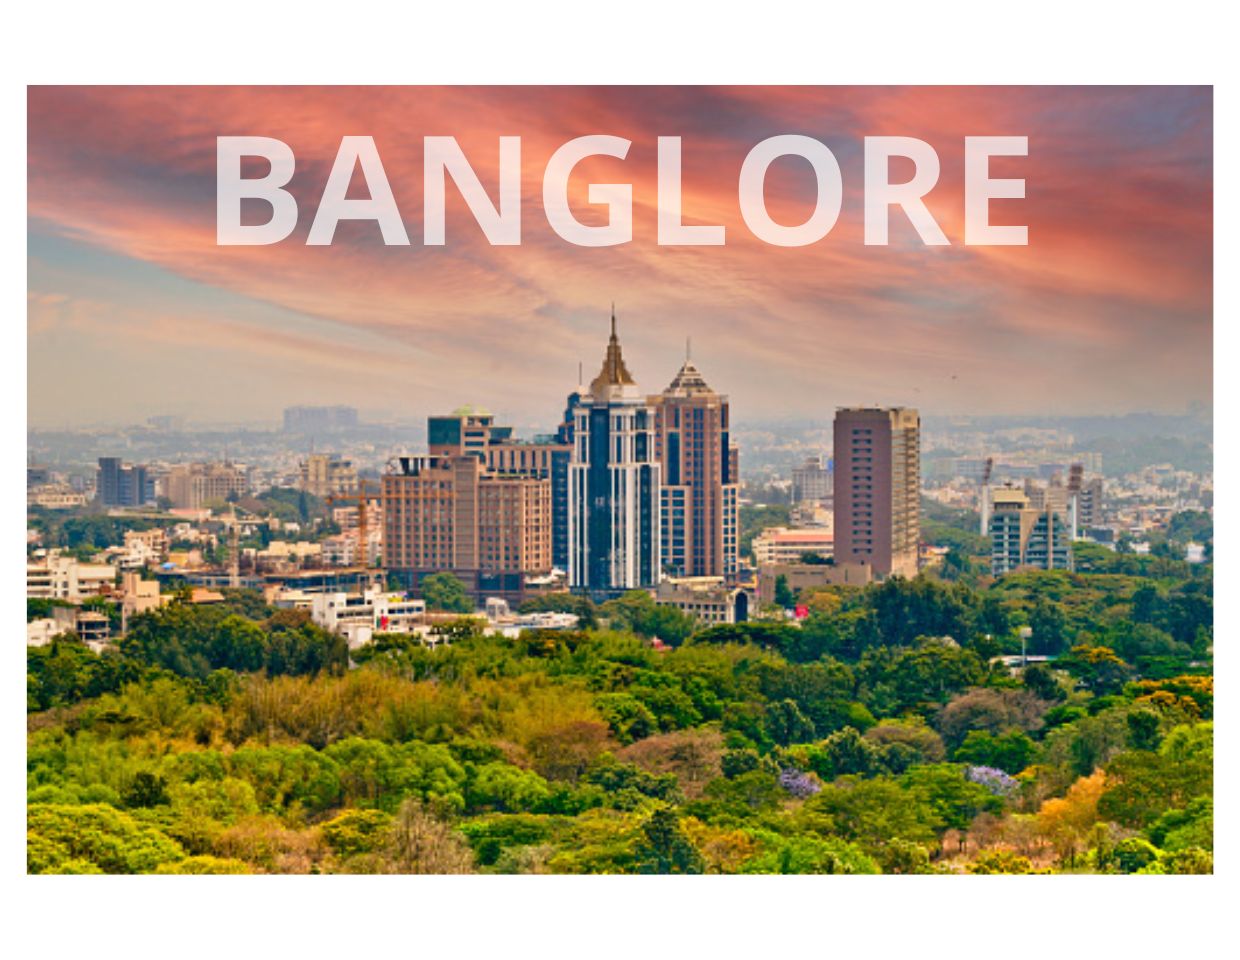 Exploring-Beautiful-Places-Bangalore